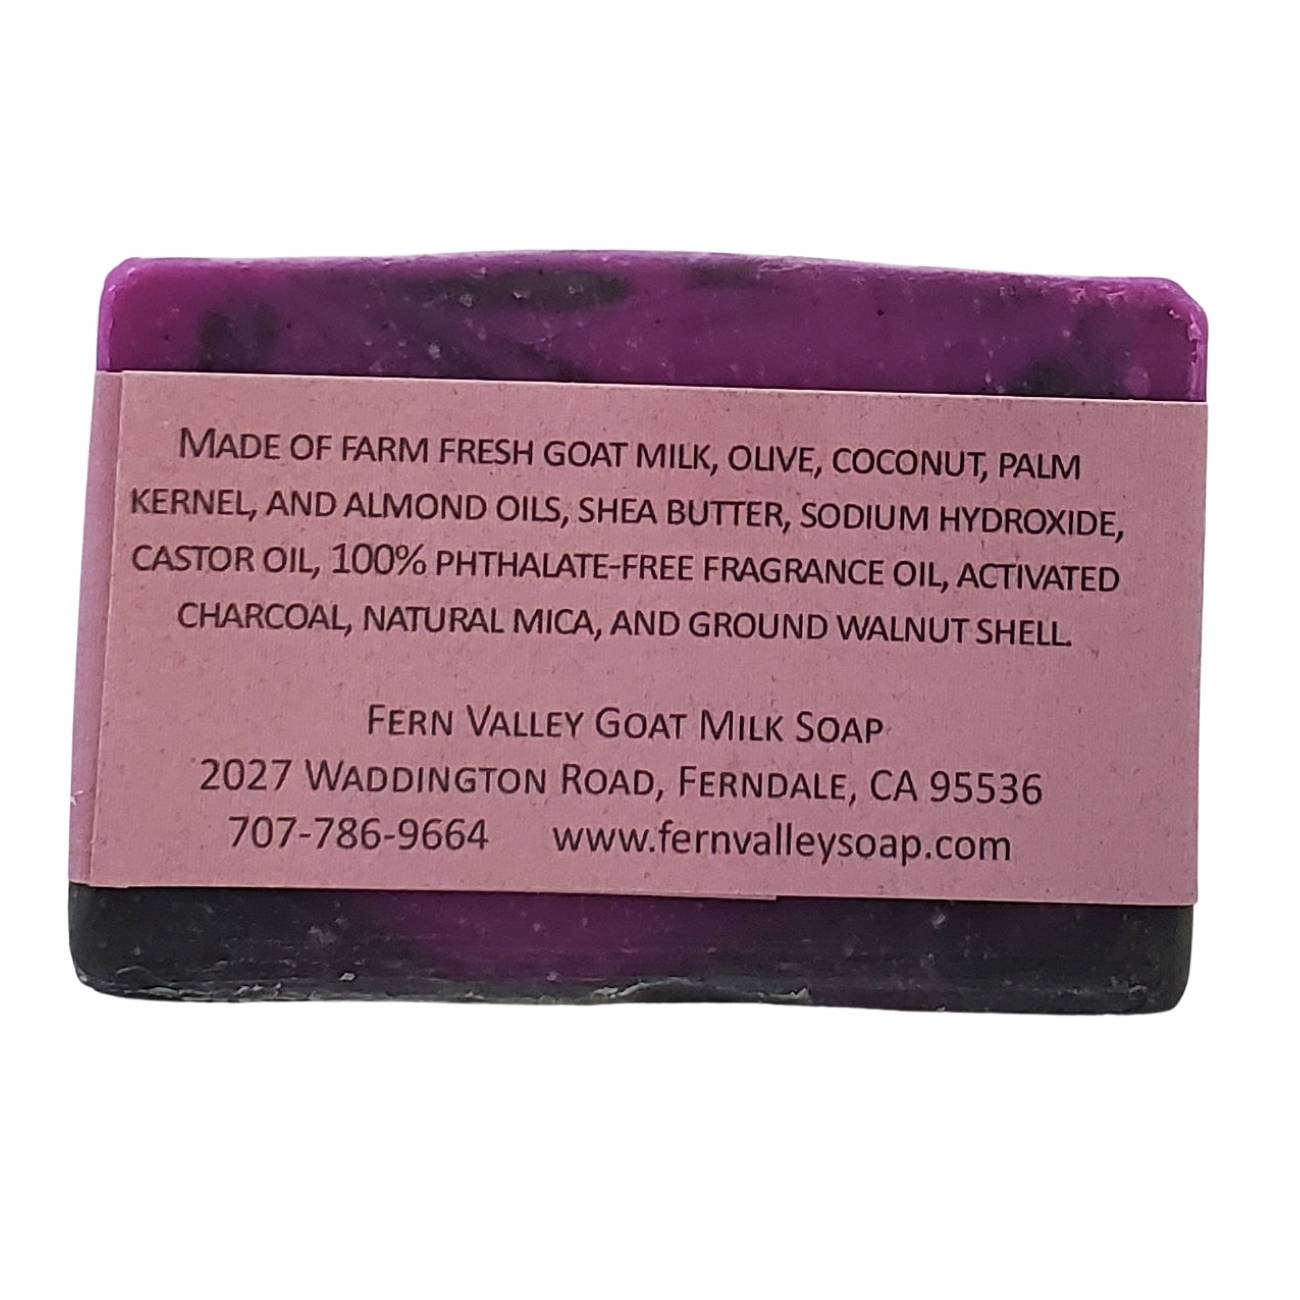 Natural Goat Milk Soap | Charcoal Exfoliating Scrub | Angel - Flirty Floral Scent